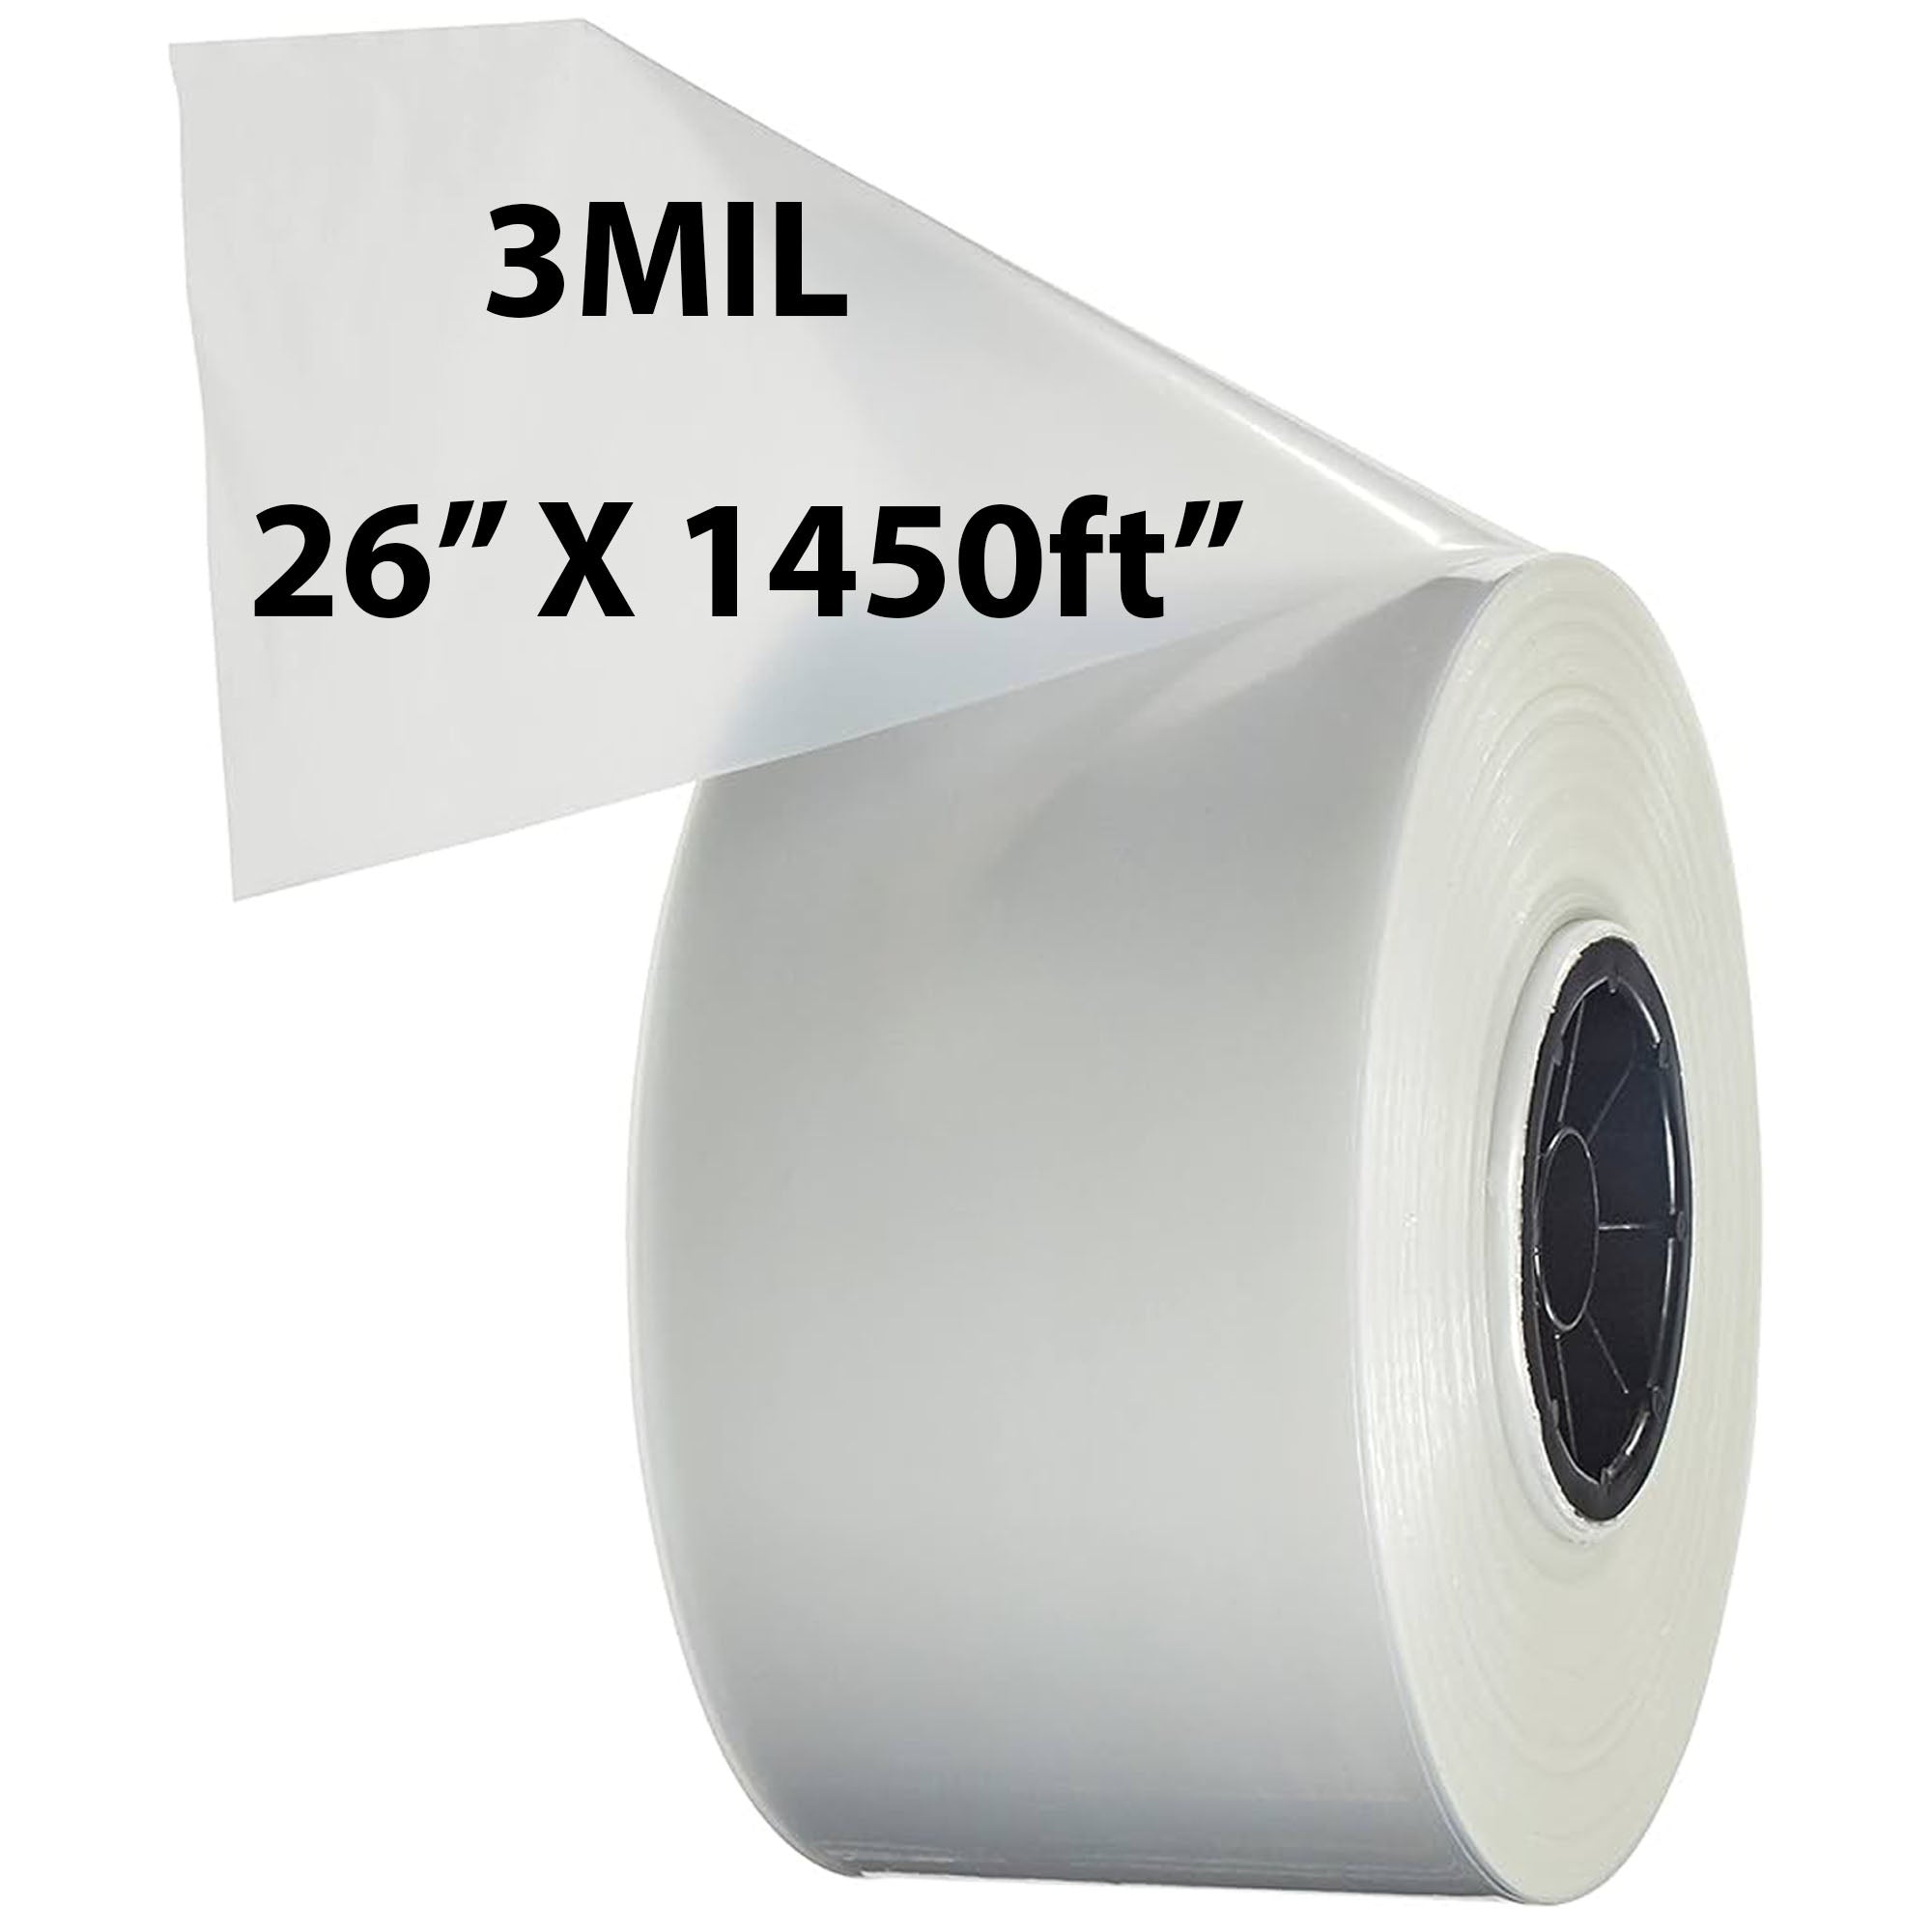 Food Grade Poly Tubing Roll Bags 3Mil 26x1450ft- Impulse Heat Sealer